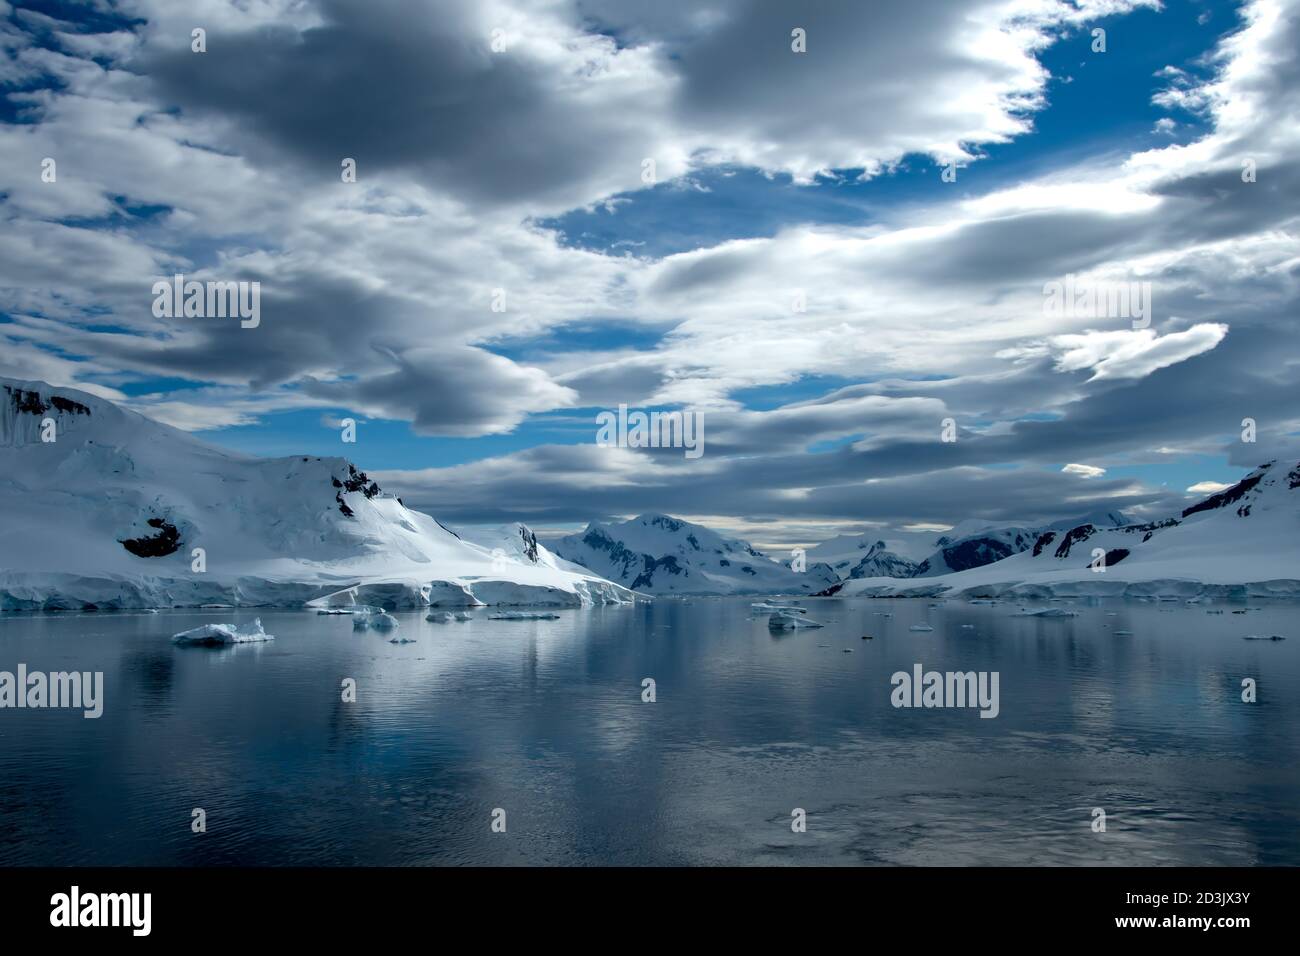 Icebergs and extreme terrain in Antarctica. Stock Photo